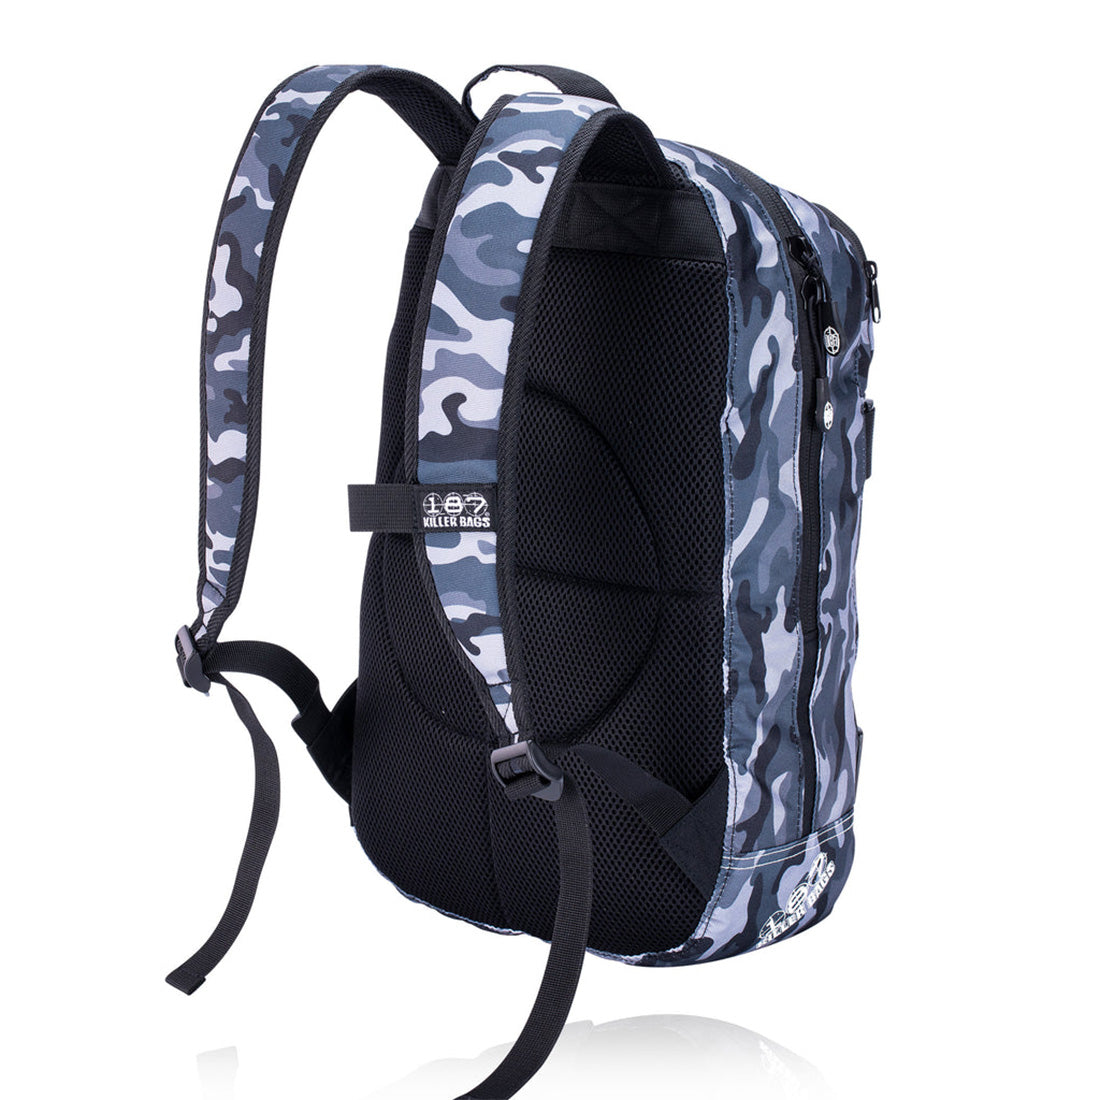 187 Killer Backpack - Camo Bags and Backpacks